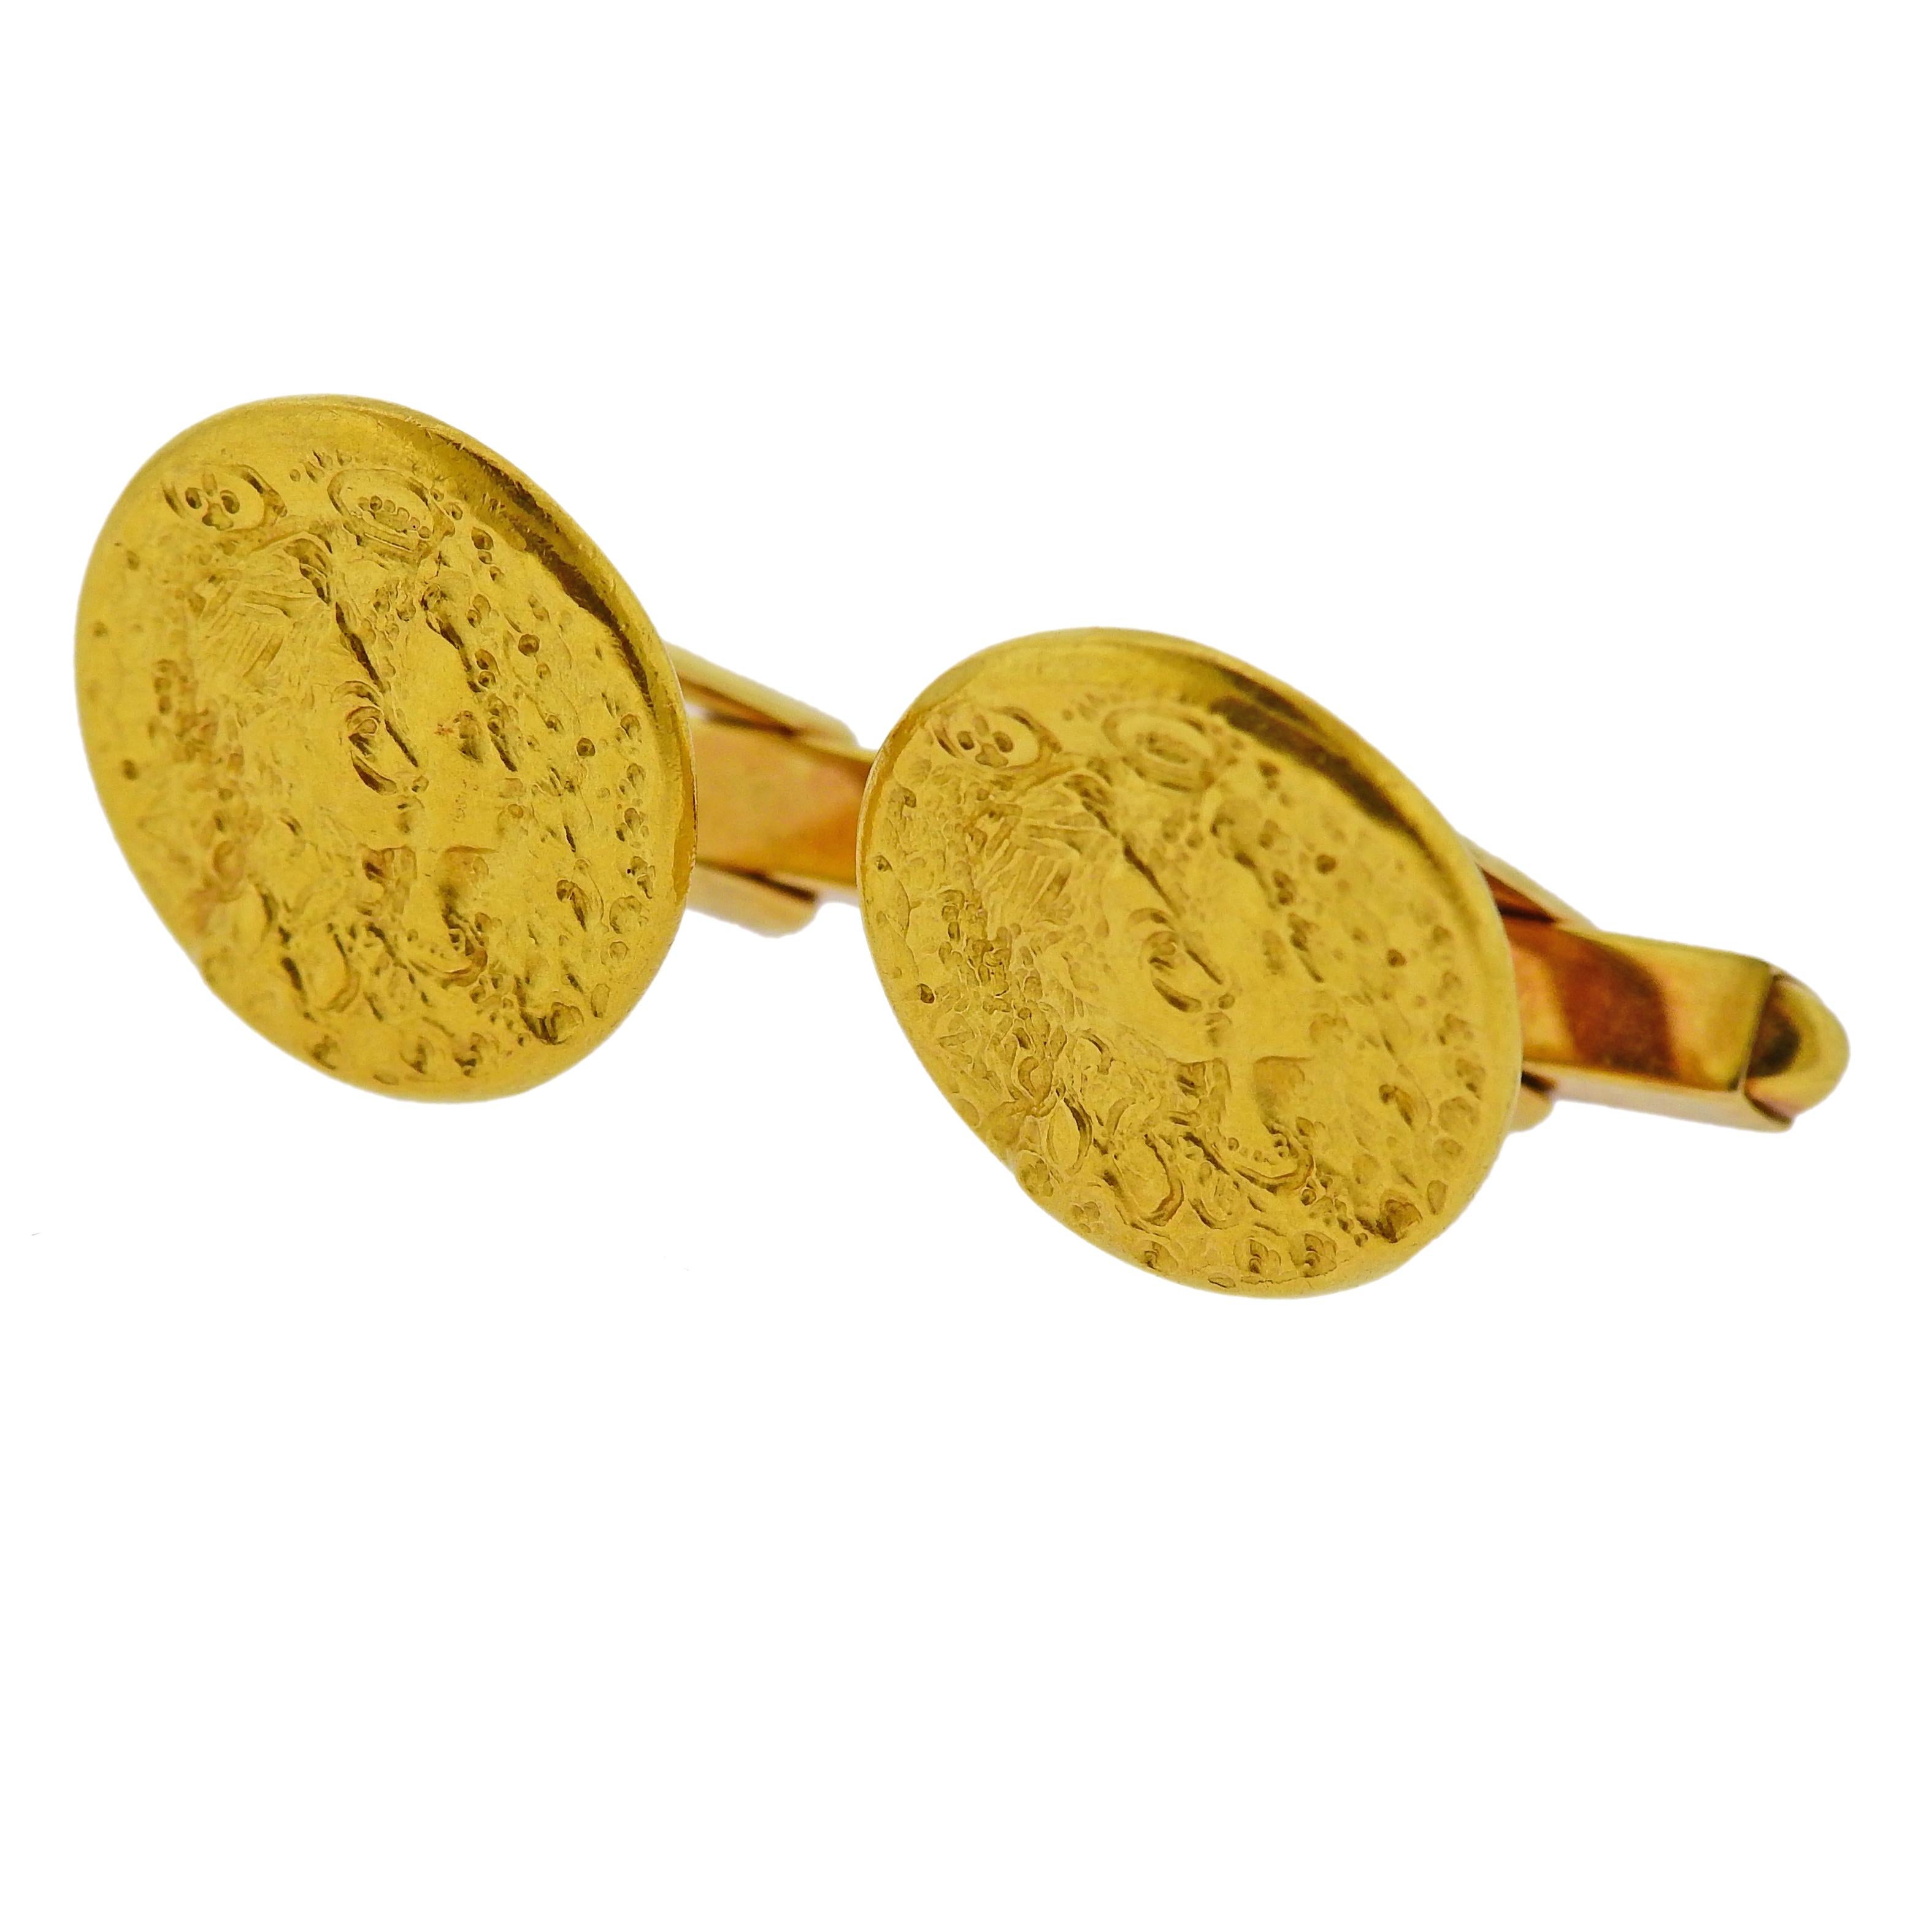 Pair of 18k yellow gold Piaget cufflinks, depicting Salvador Dali. Cufflink top is 19mm in diameter.  Weigh 21.3 grams. Marked: Piaget, 750.